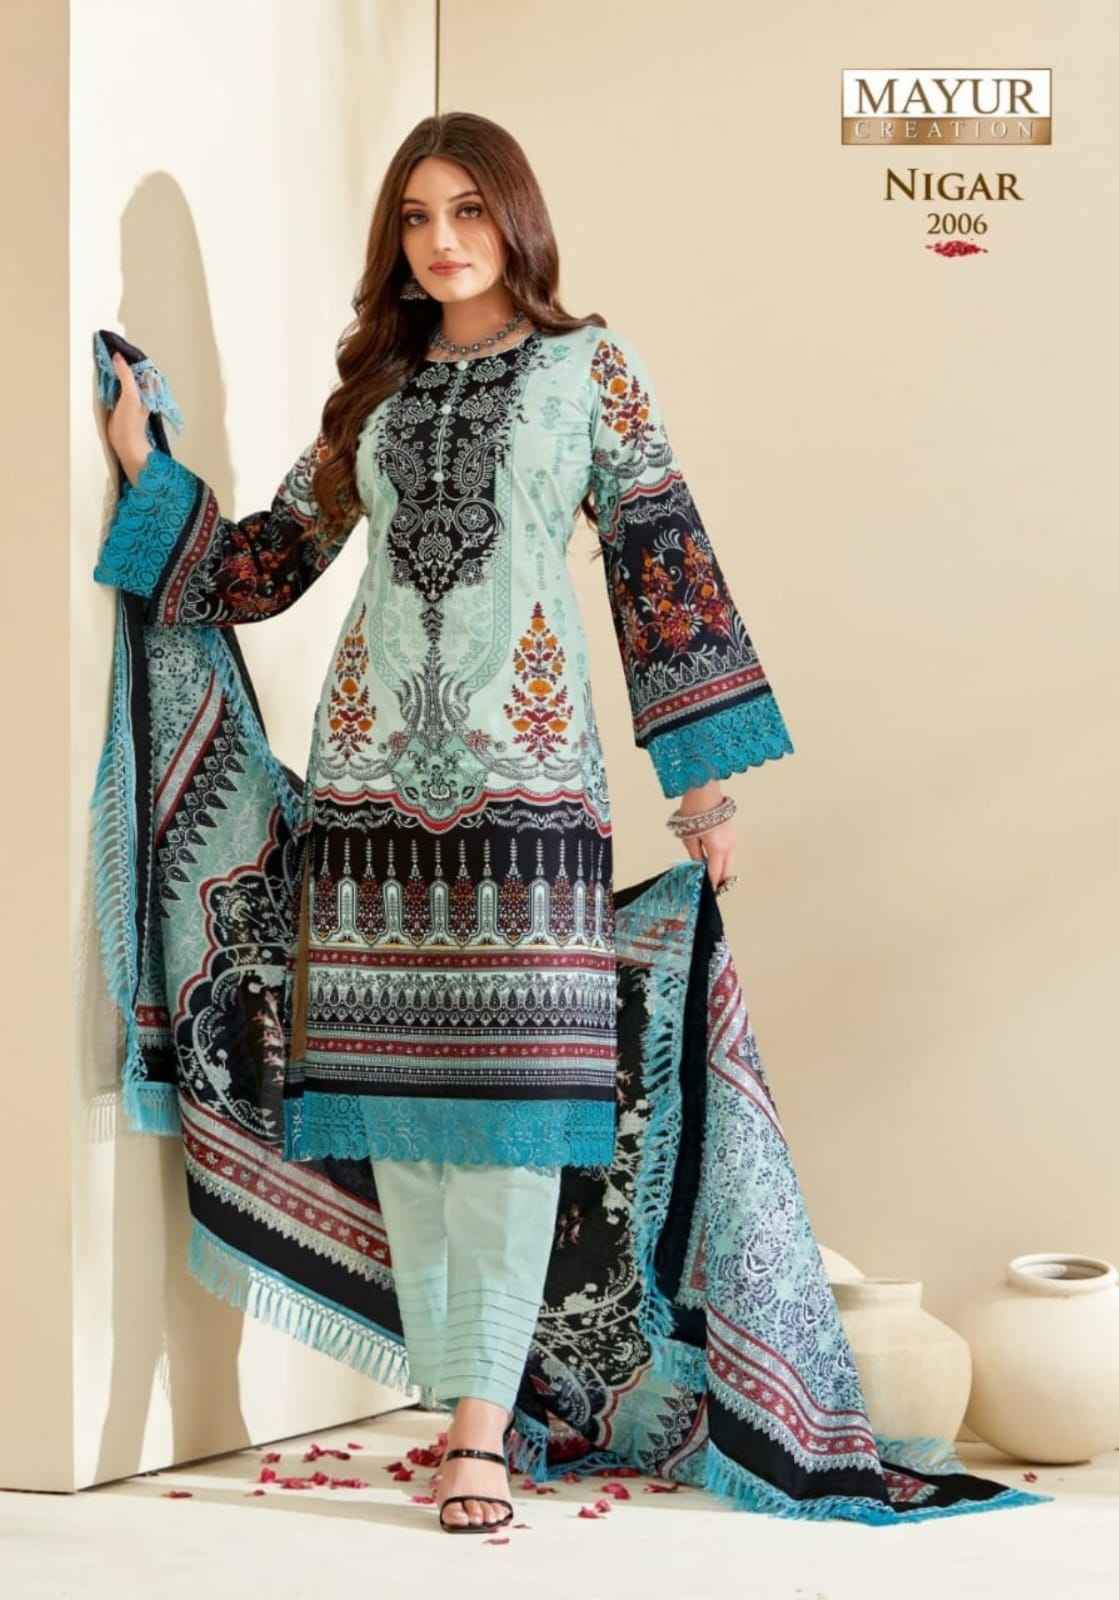 Mayur Creation Nigar Vol-2 Cotton Dress Material (10 pcs Catalogue)